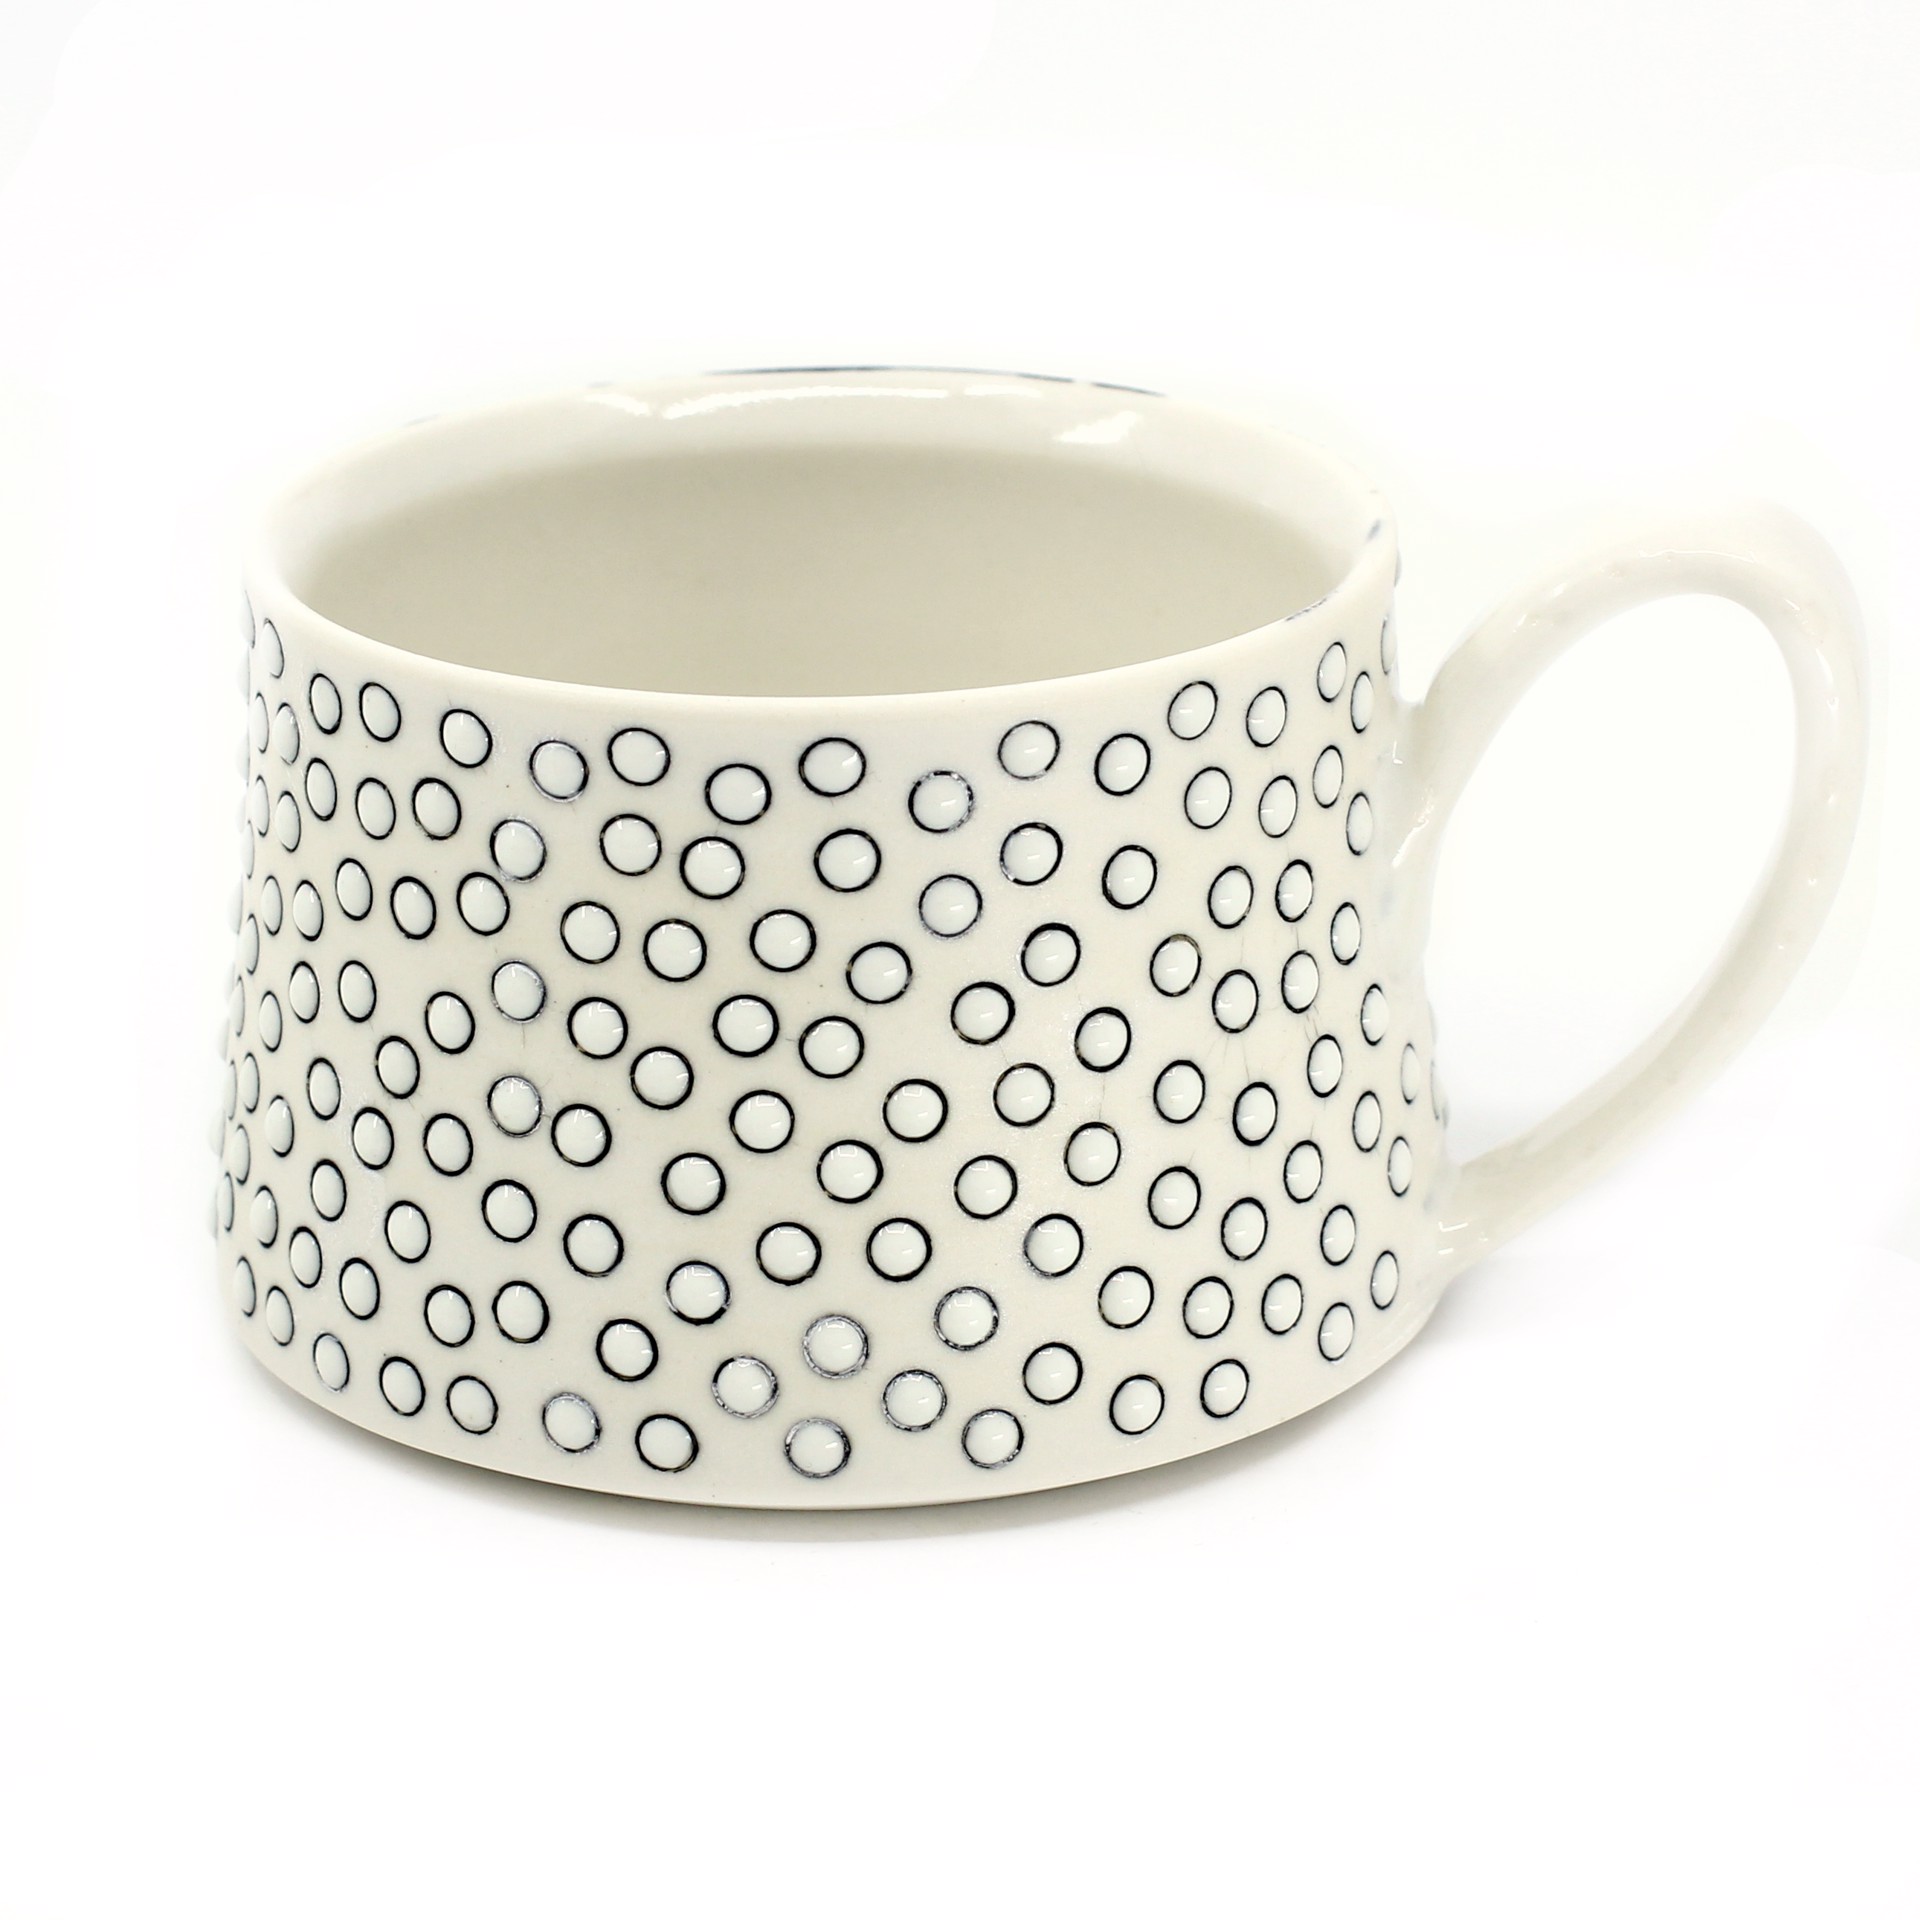 All Over Dots Mug by Bianka Groves